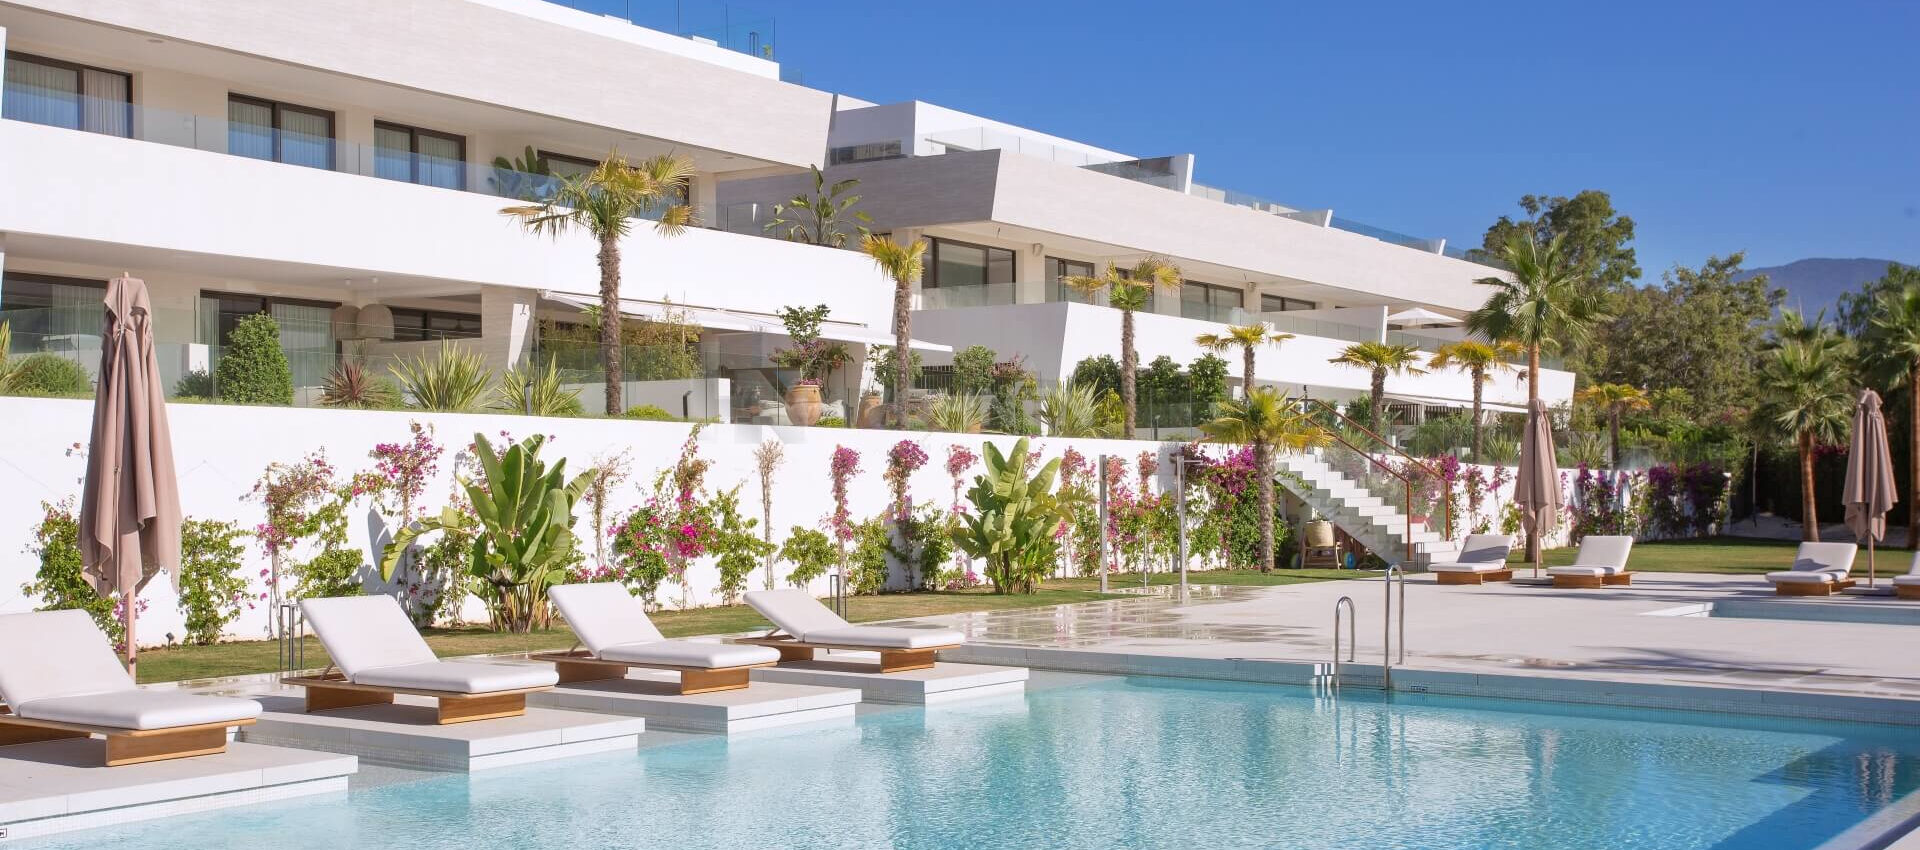 Luxurious, modern duplex penthouse apartment on the Golden Mile Marbella